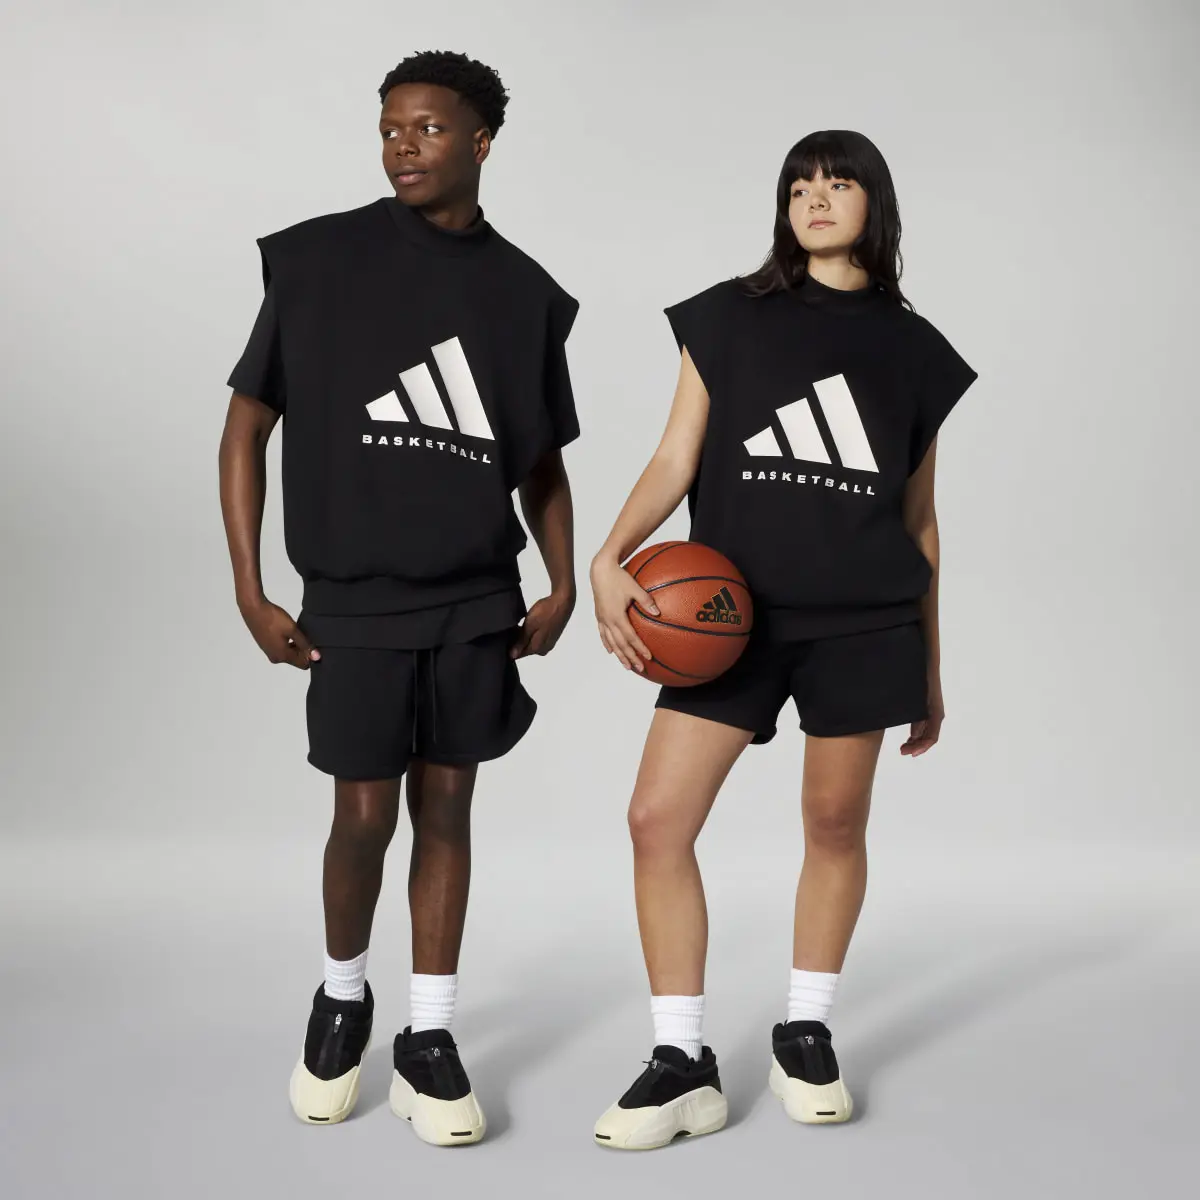 Adidas Basketball Sleeveless Sweatshirt. 1